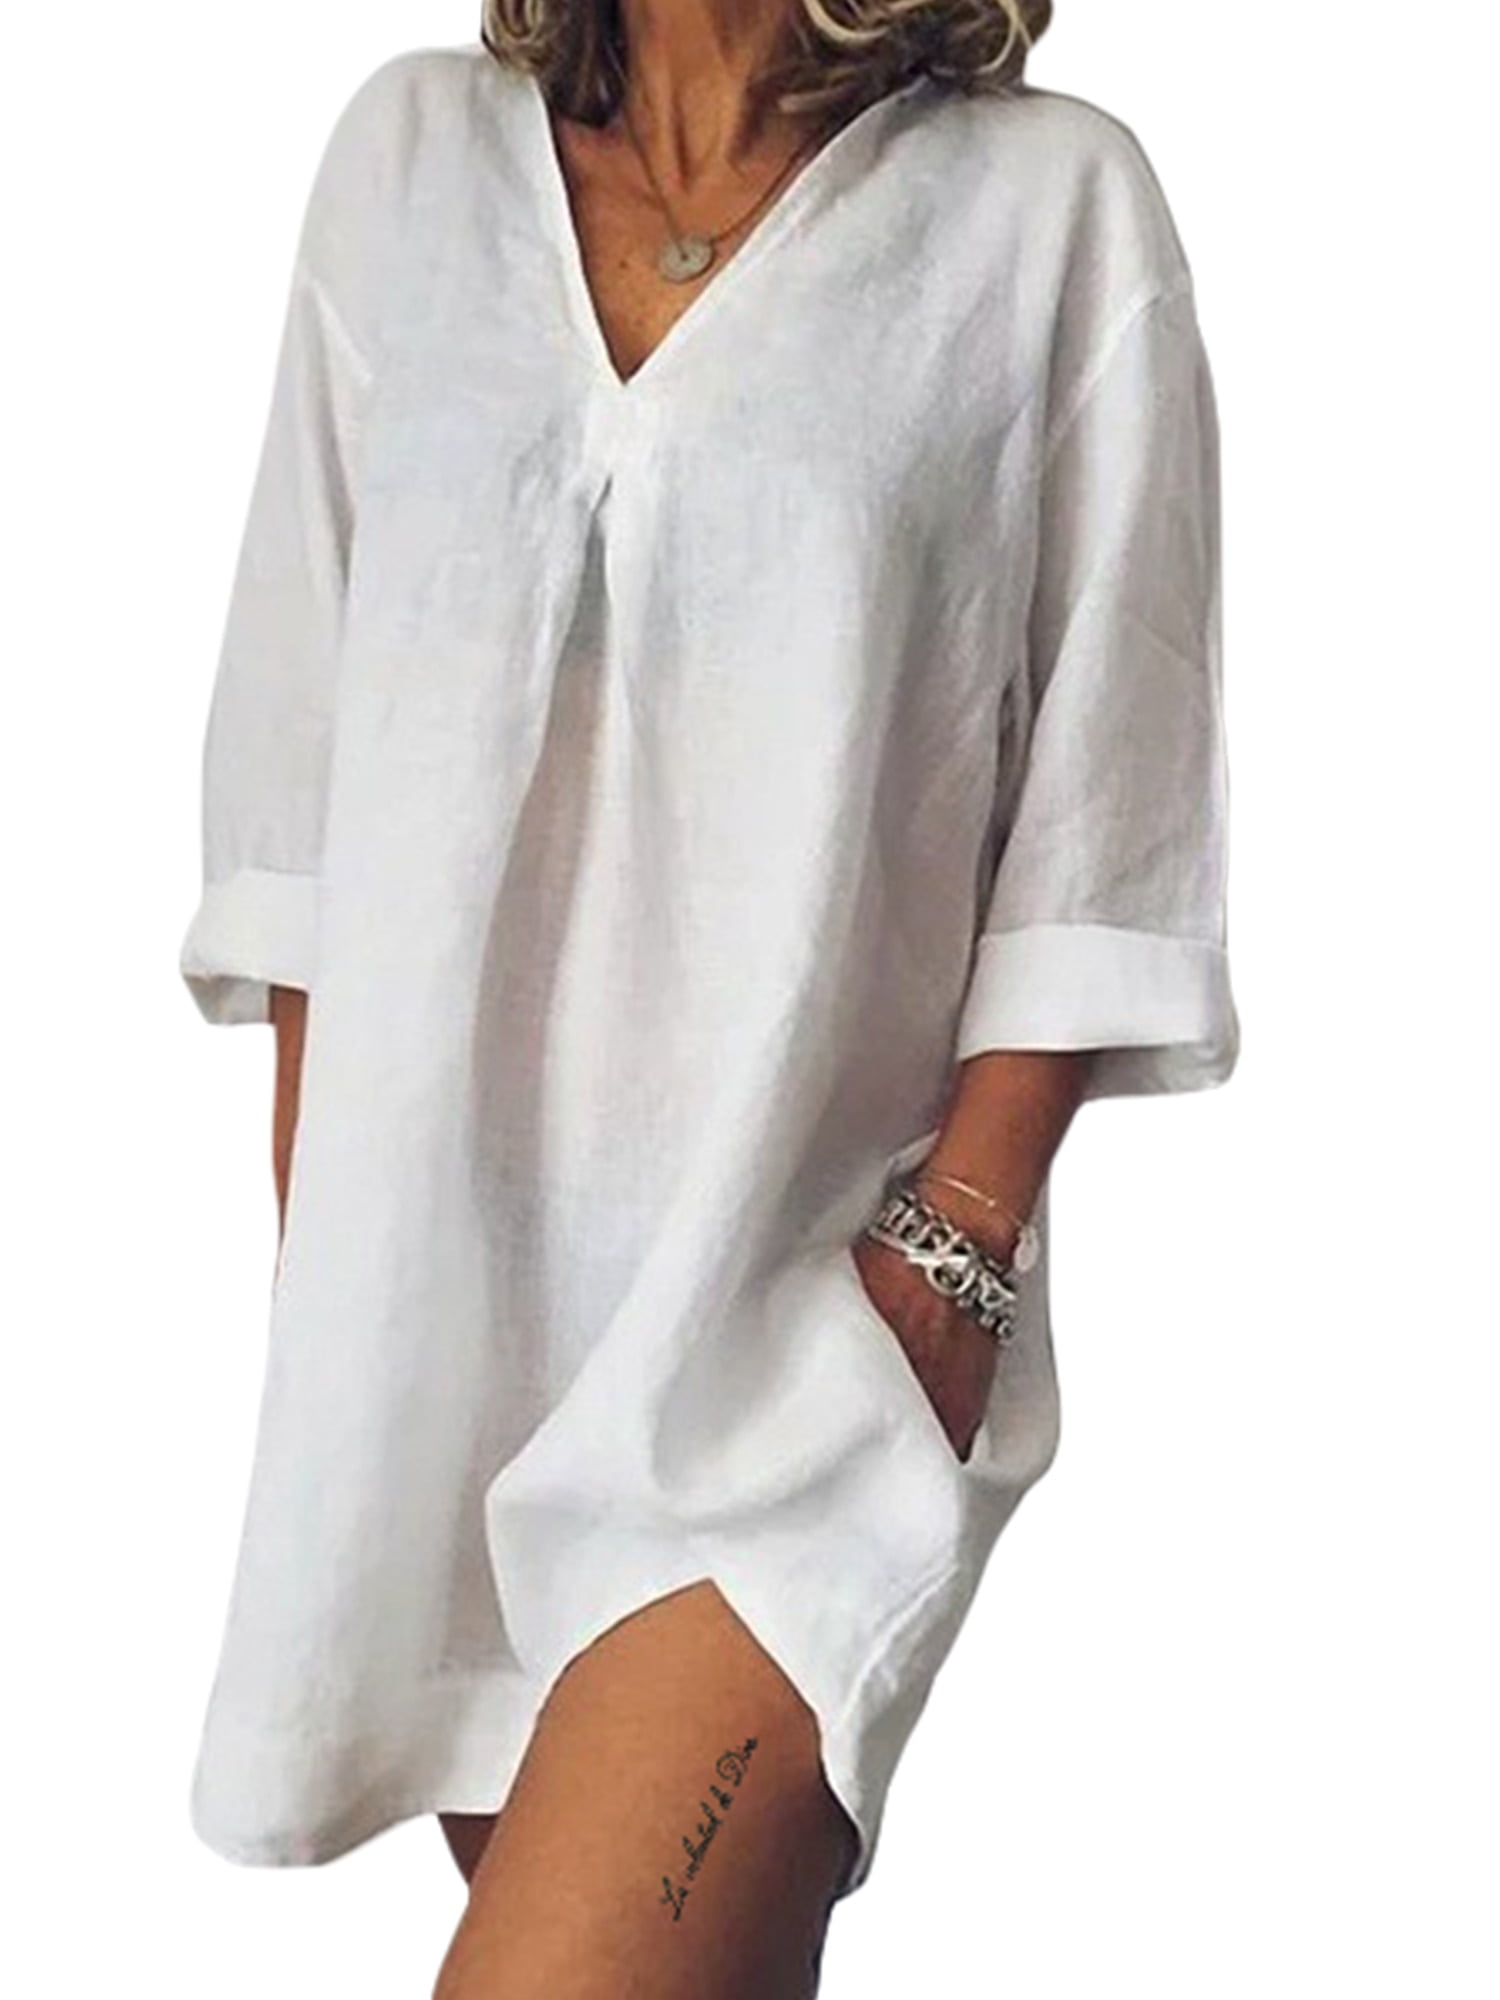 Plus Size Women Long Sleeve Blouse Cotton Linen Kaftan Baggy Tops Tunic T Shirt 